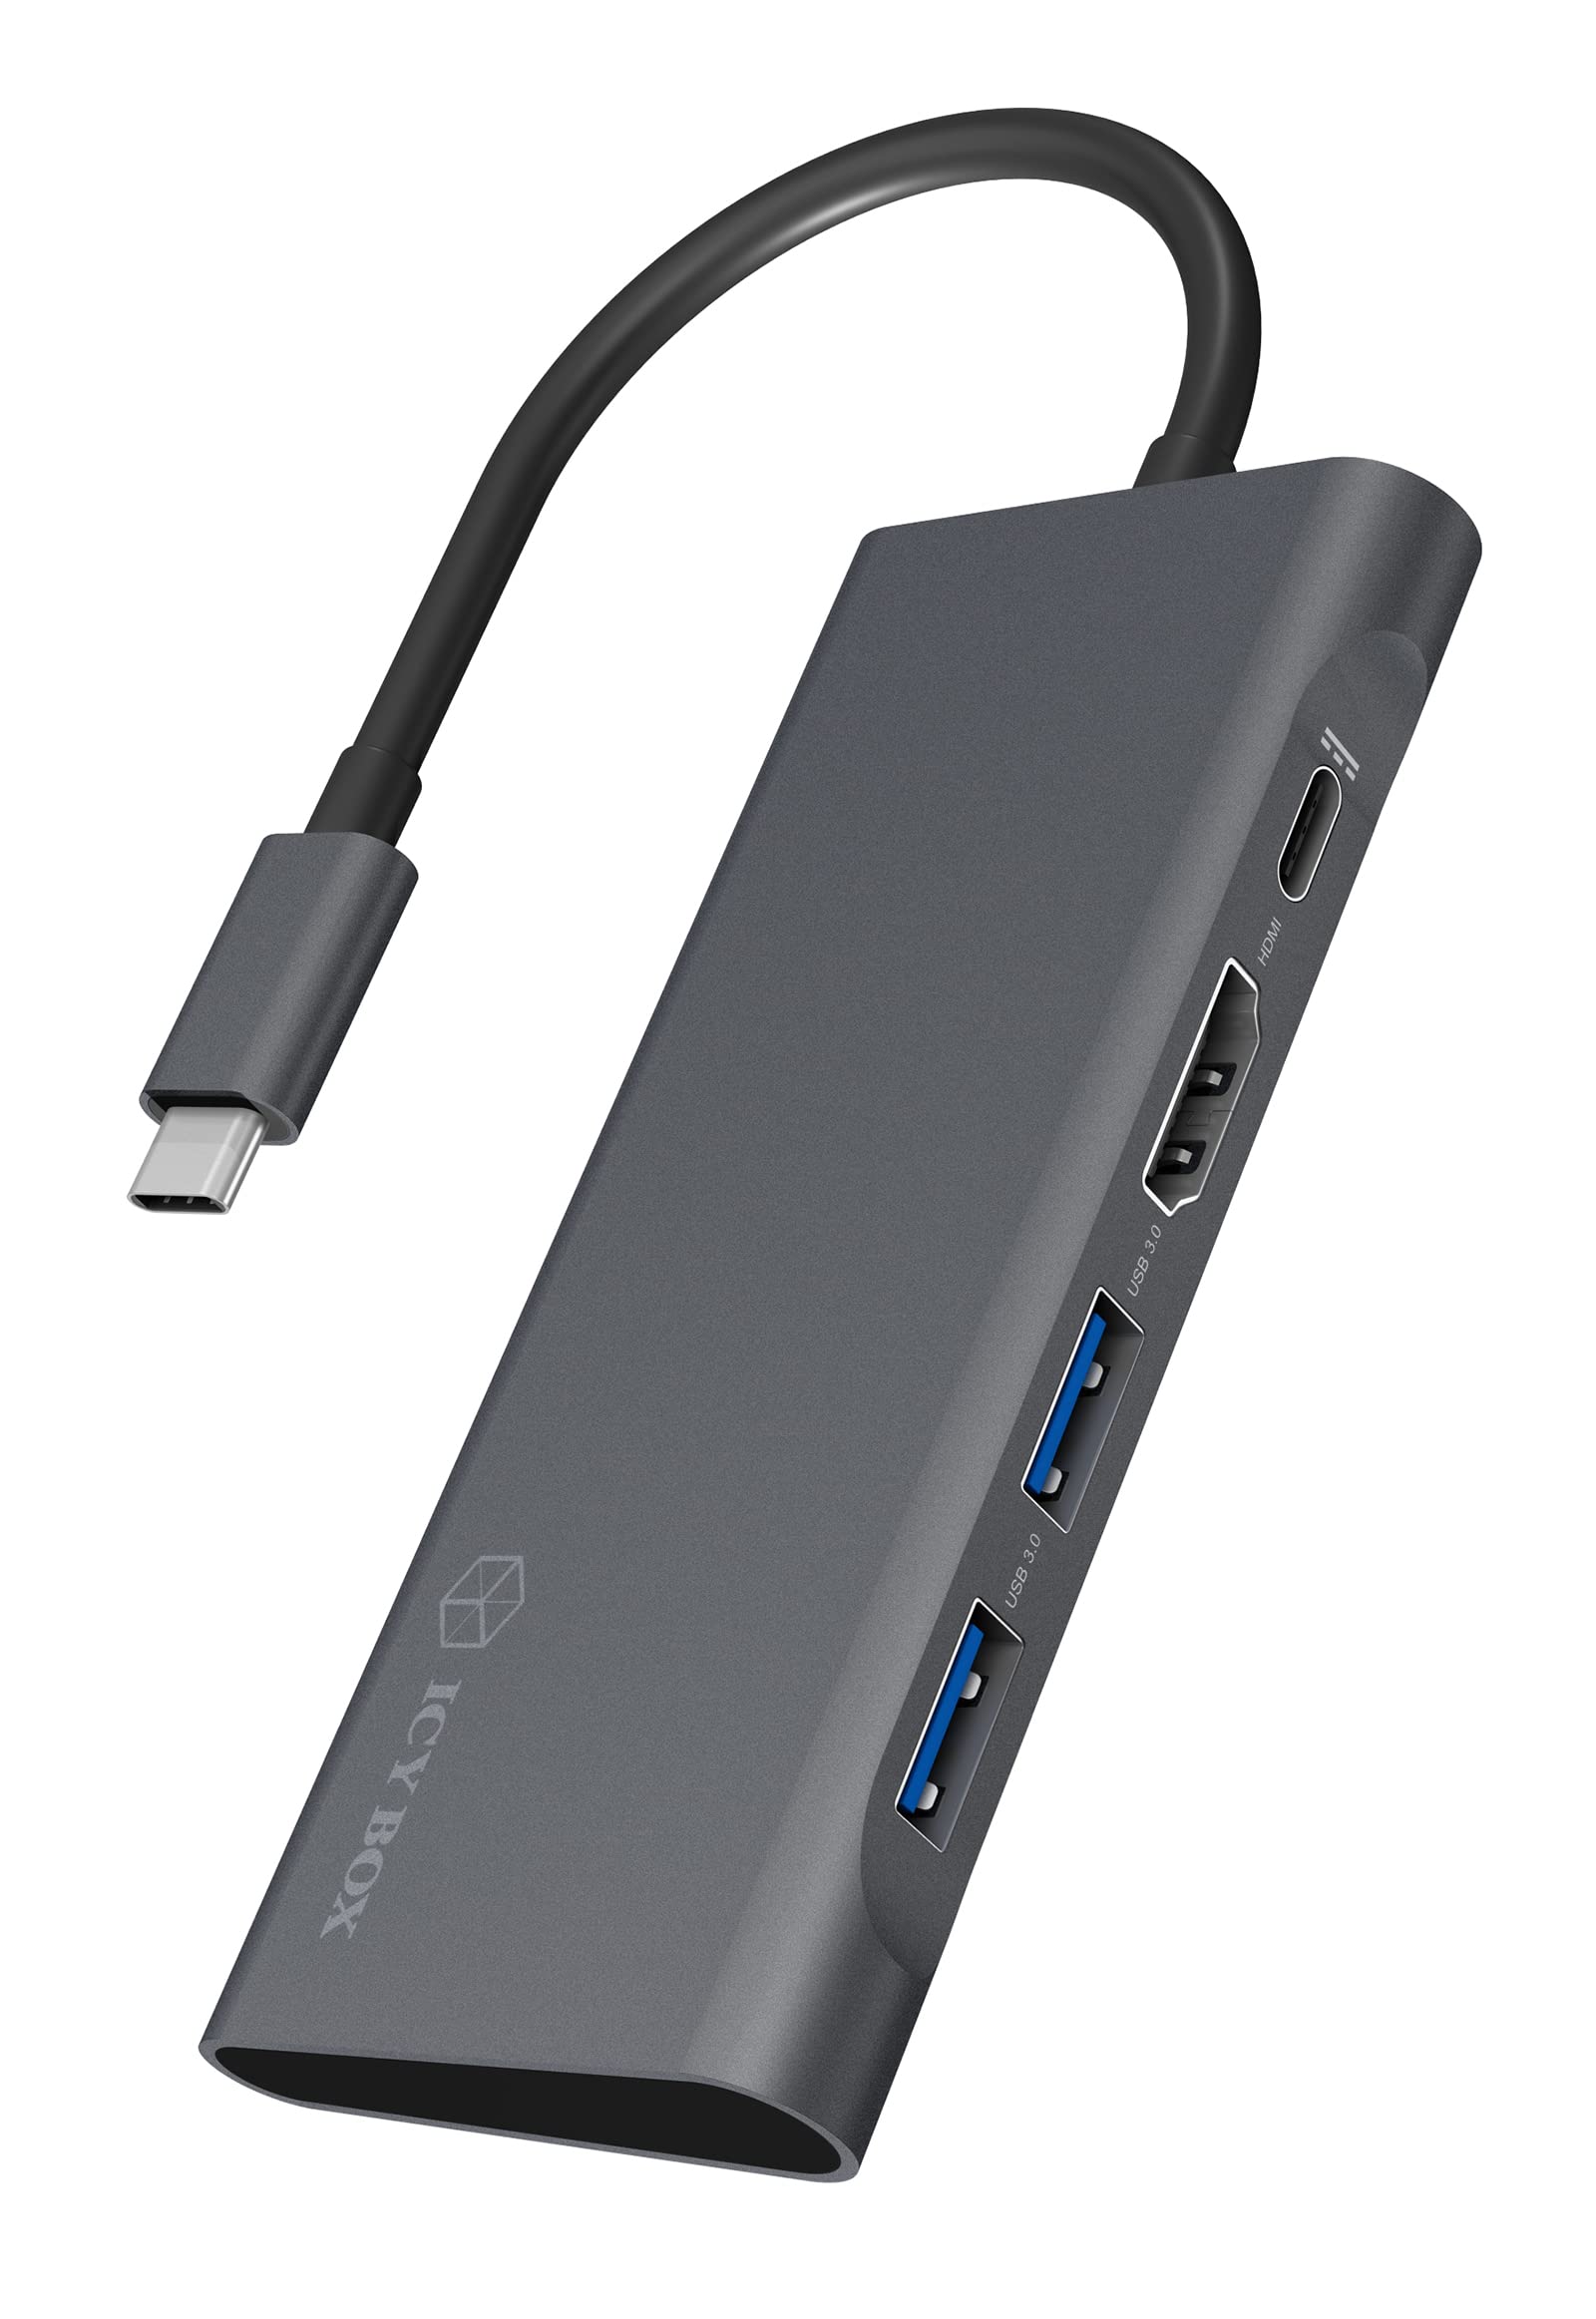 ICY BOX USB-C Docking Station (4-in-1) mit HDMI (4k 60Hz), 3-fach USB 3.0 HUB, 60W Power Delivery, Aluminium, Grau für Laptop, MacBook, iPad Pro oder Android Tablet/Smartphone